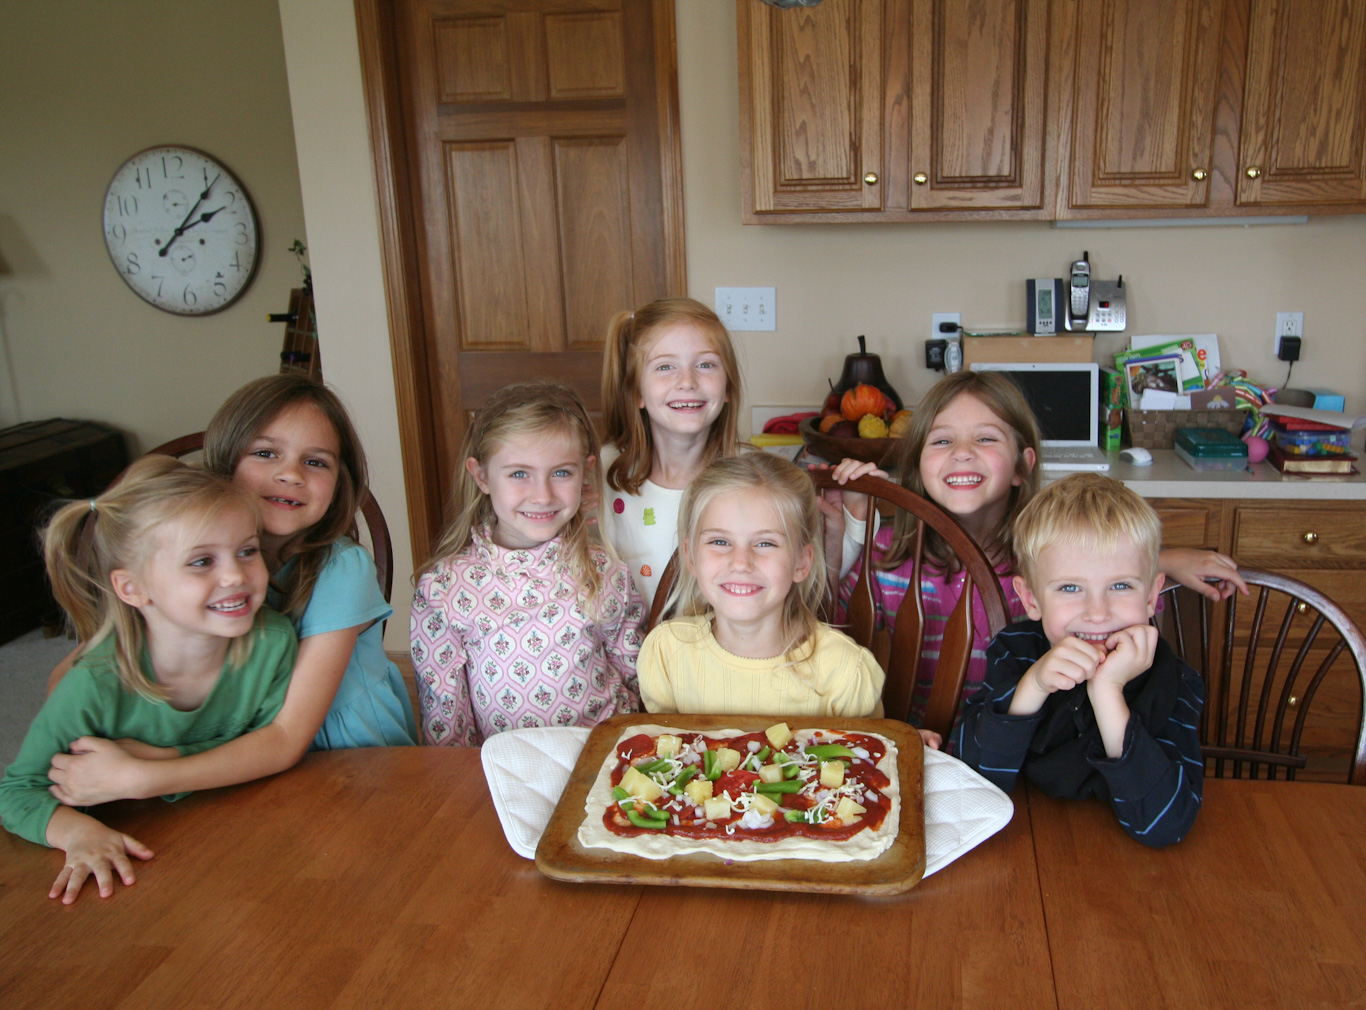 (around 2008) Sarah-Kate, Anna, and Simon make pineapple pizza with friends.